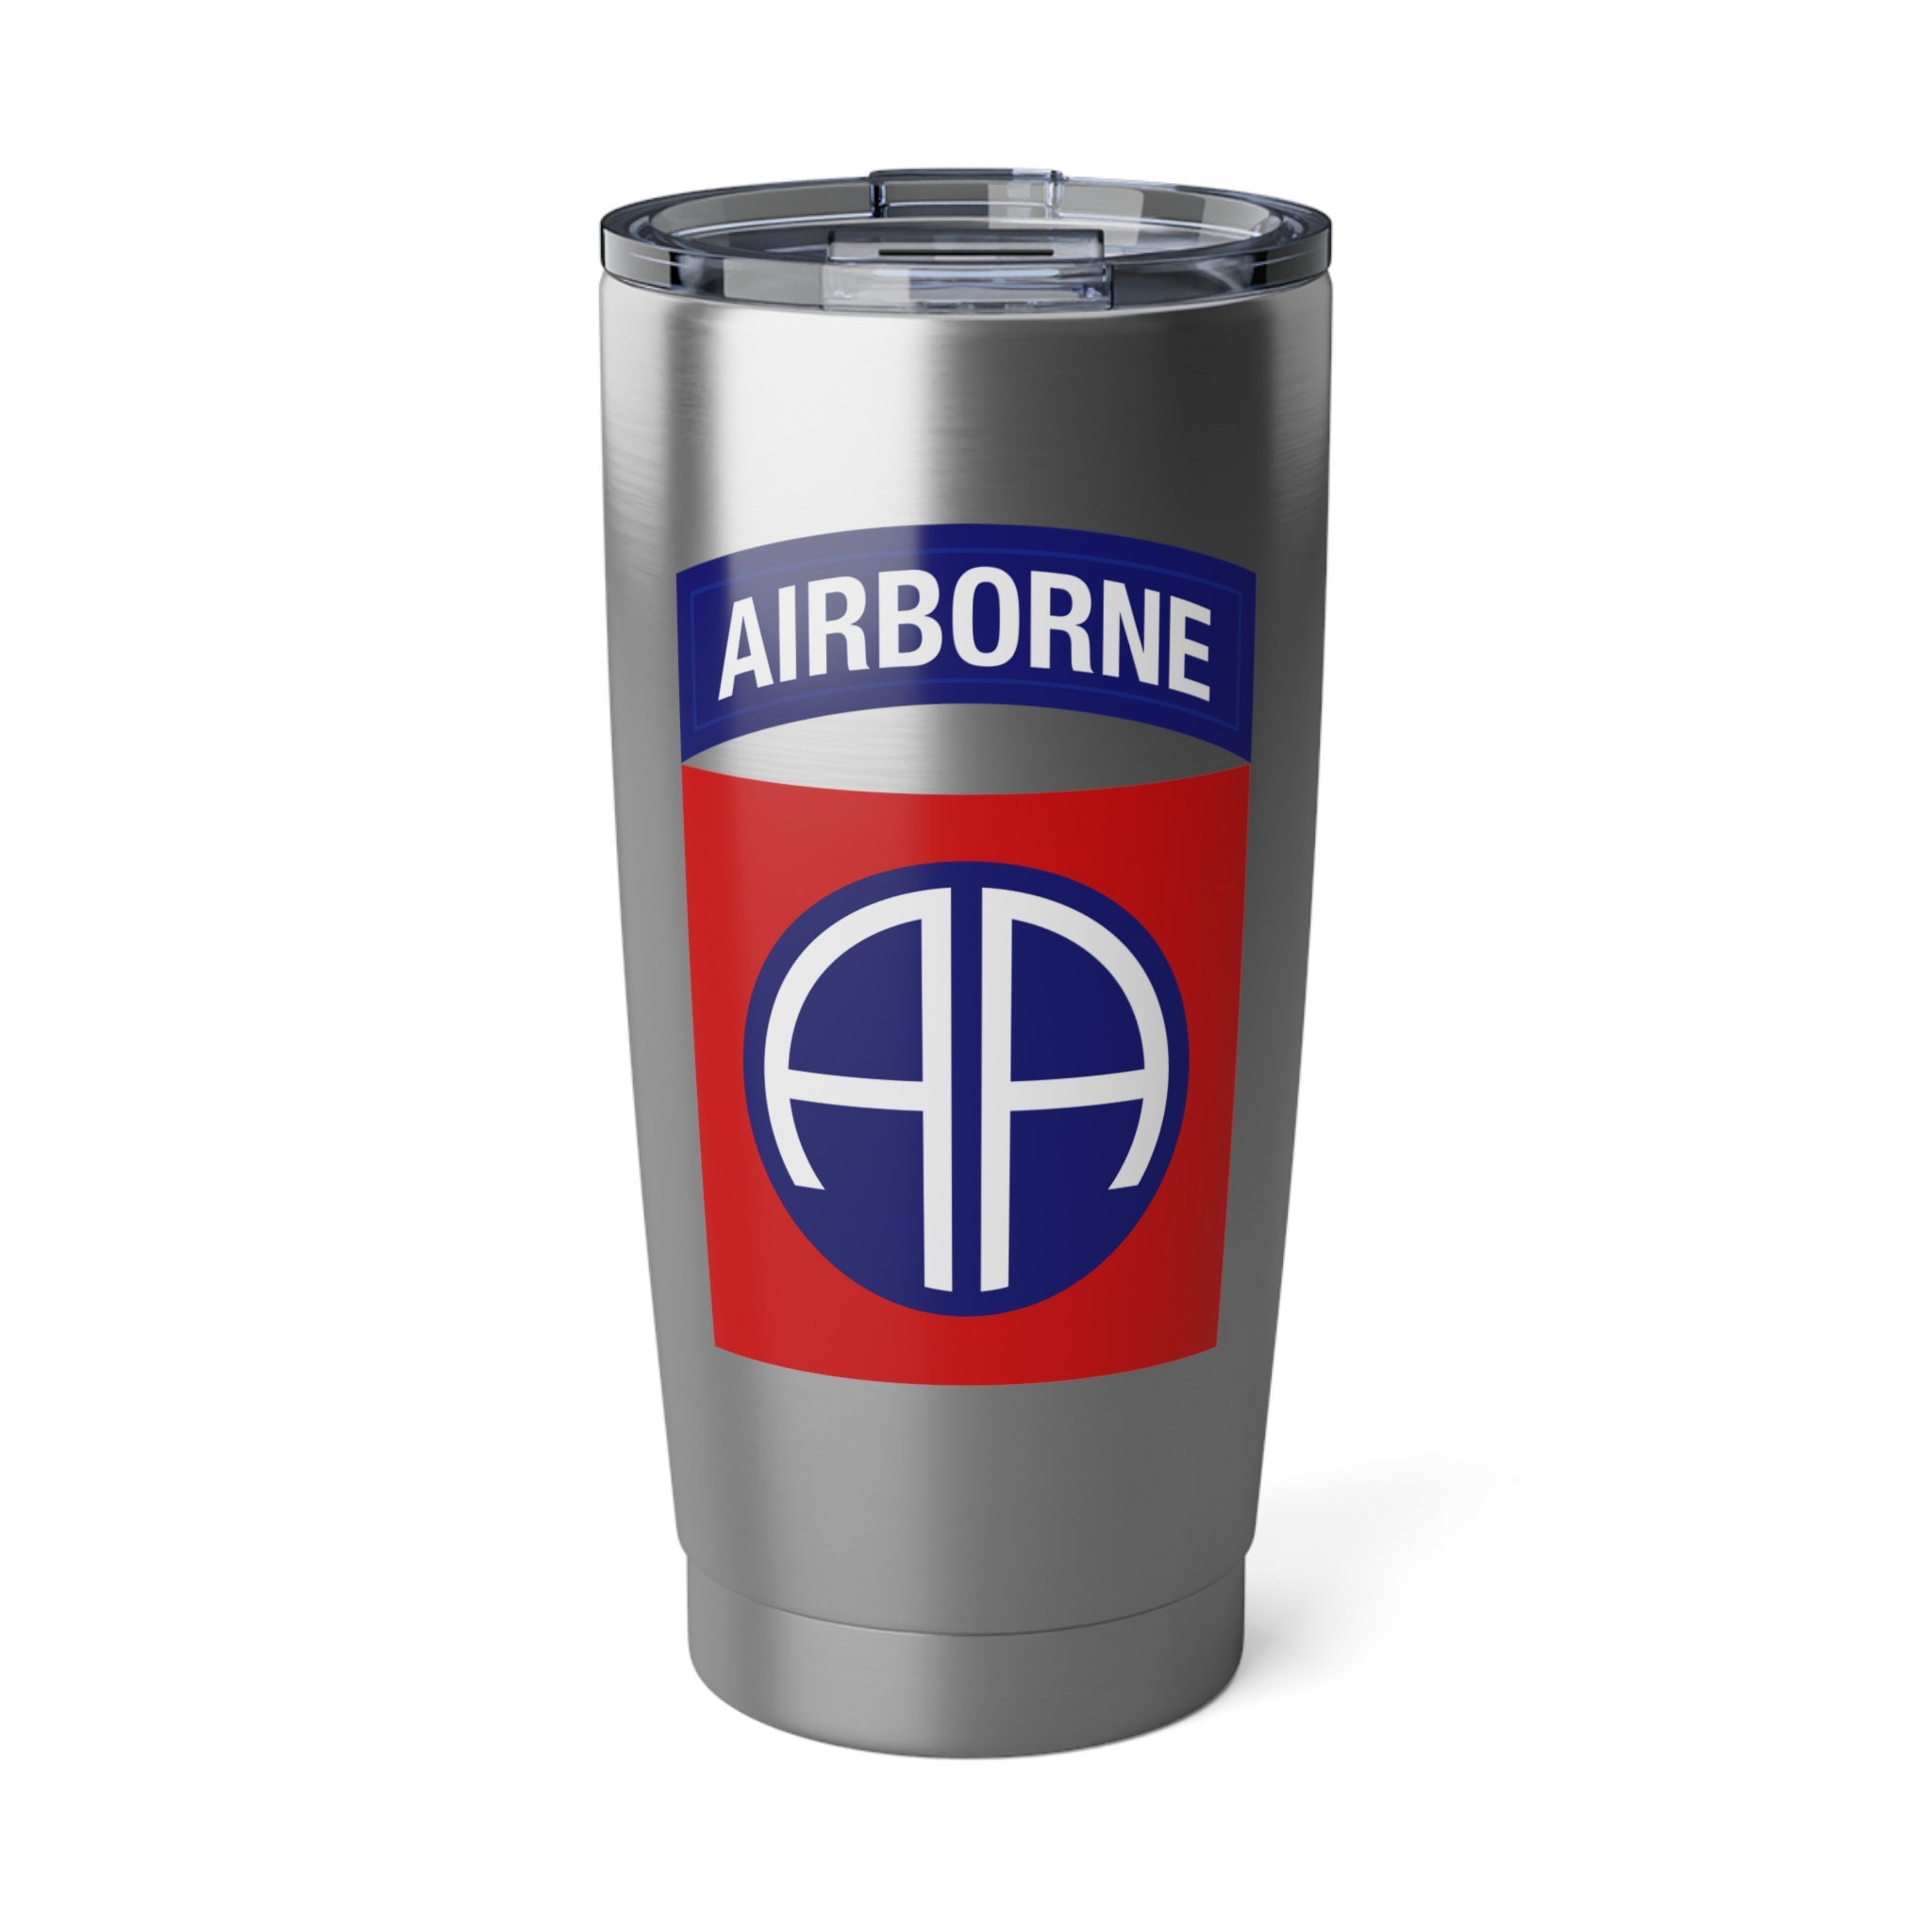 82nd Airborne 16 oz. Travel Coffee Mug RTIC